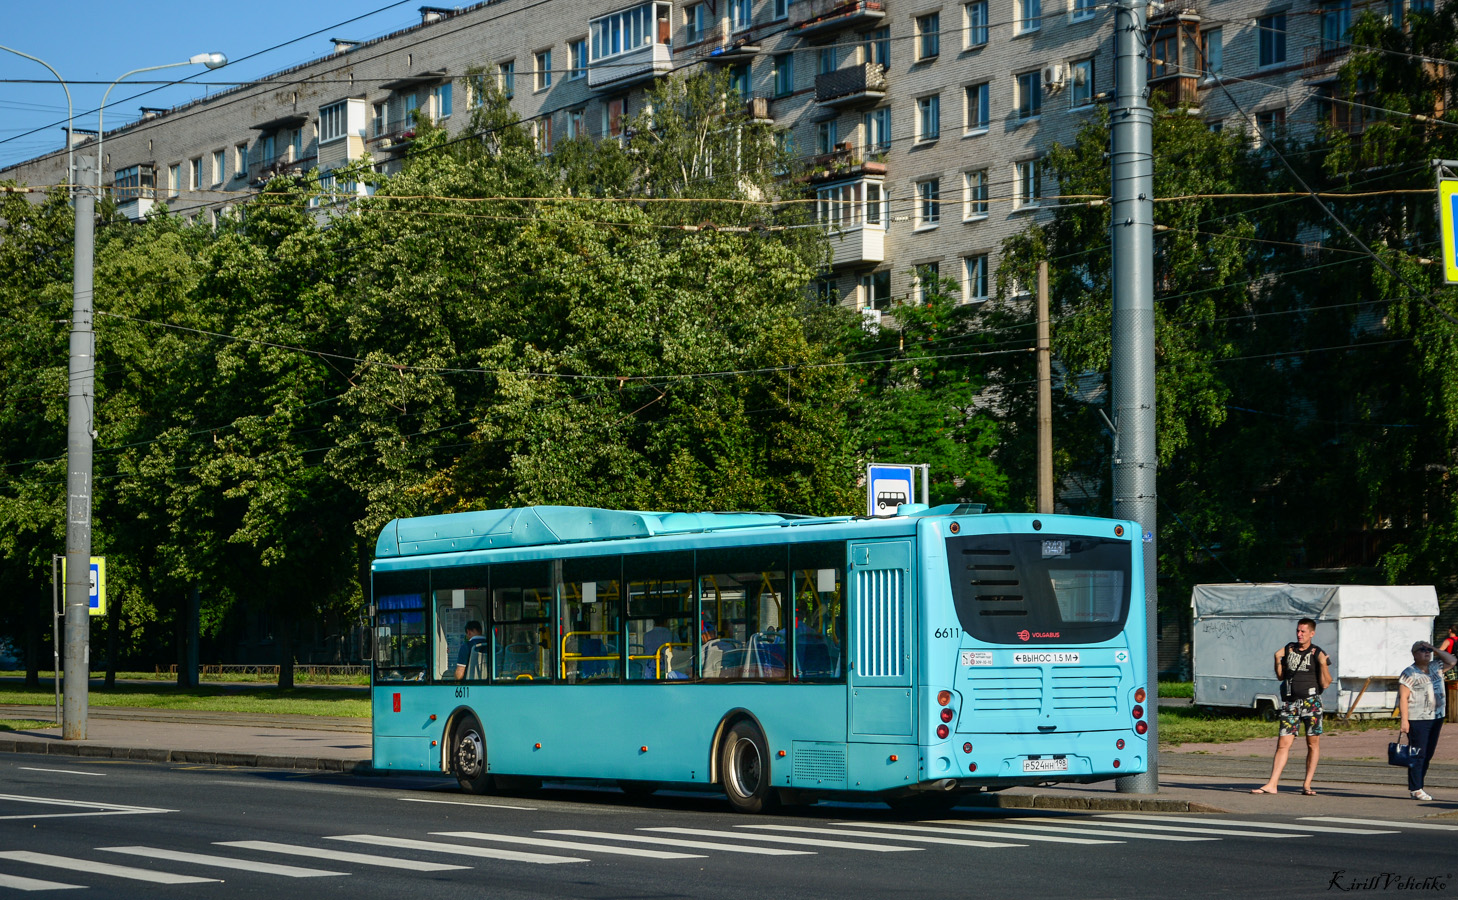 Saint Petersburg, Volgabus-5270.G4 (CNG) # 6611